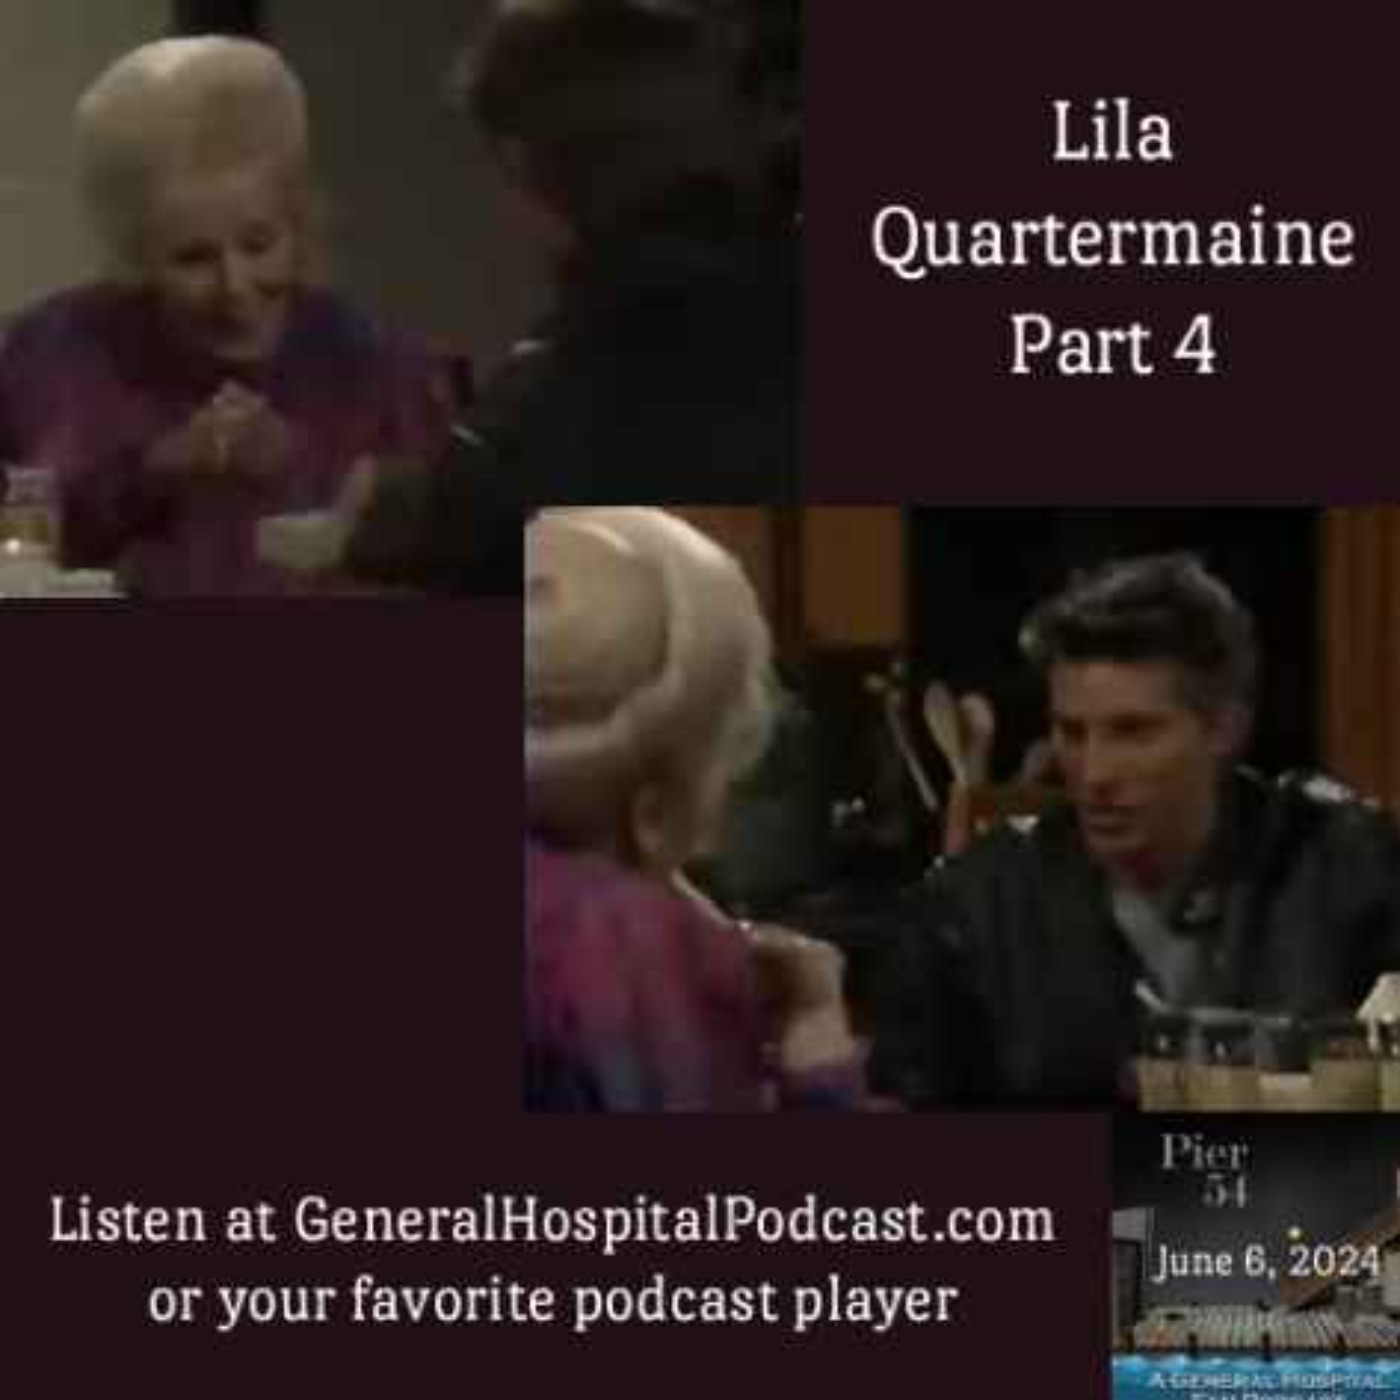 Episode 550: The Port Charles 411 - Lila Quartermaine Part 4